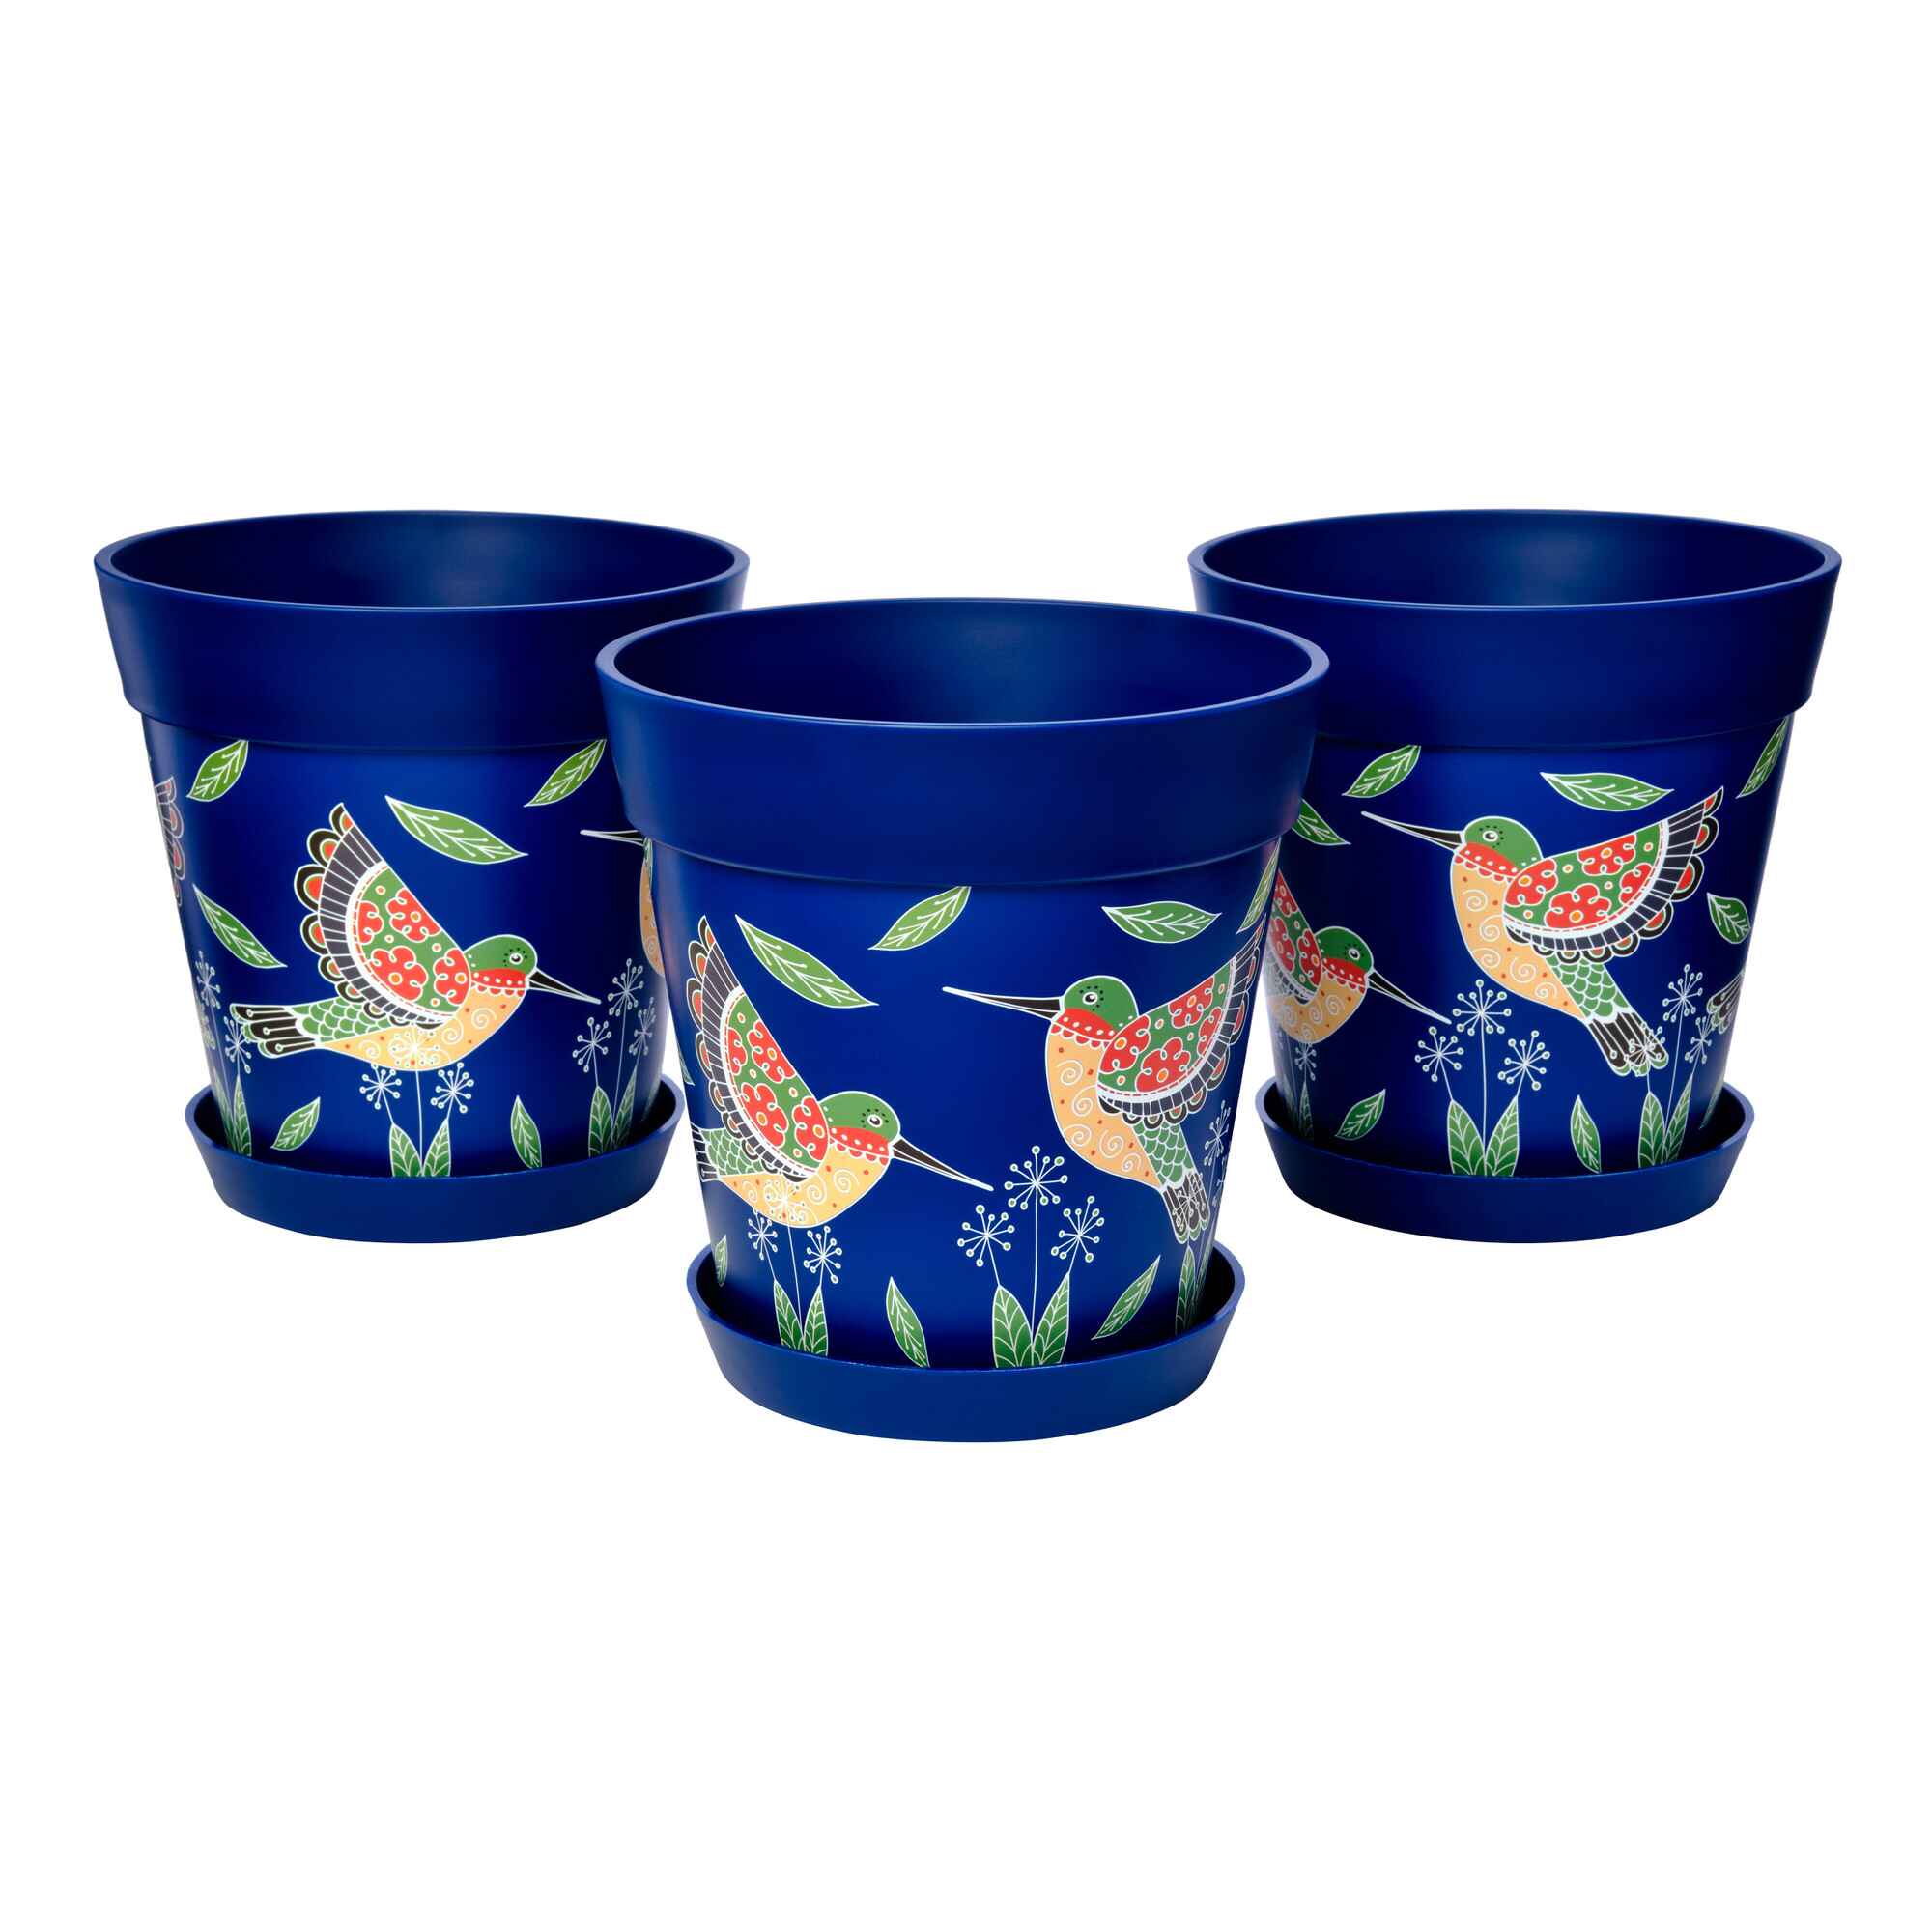 Picture of 3 Medium 22cm Blue Hummingbird Pattern Plastic Indoor/Outdoor Flowerpot and Saucers